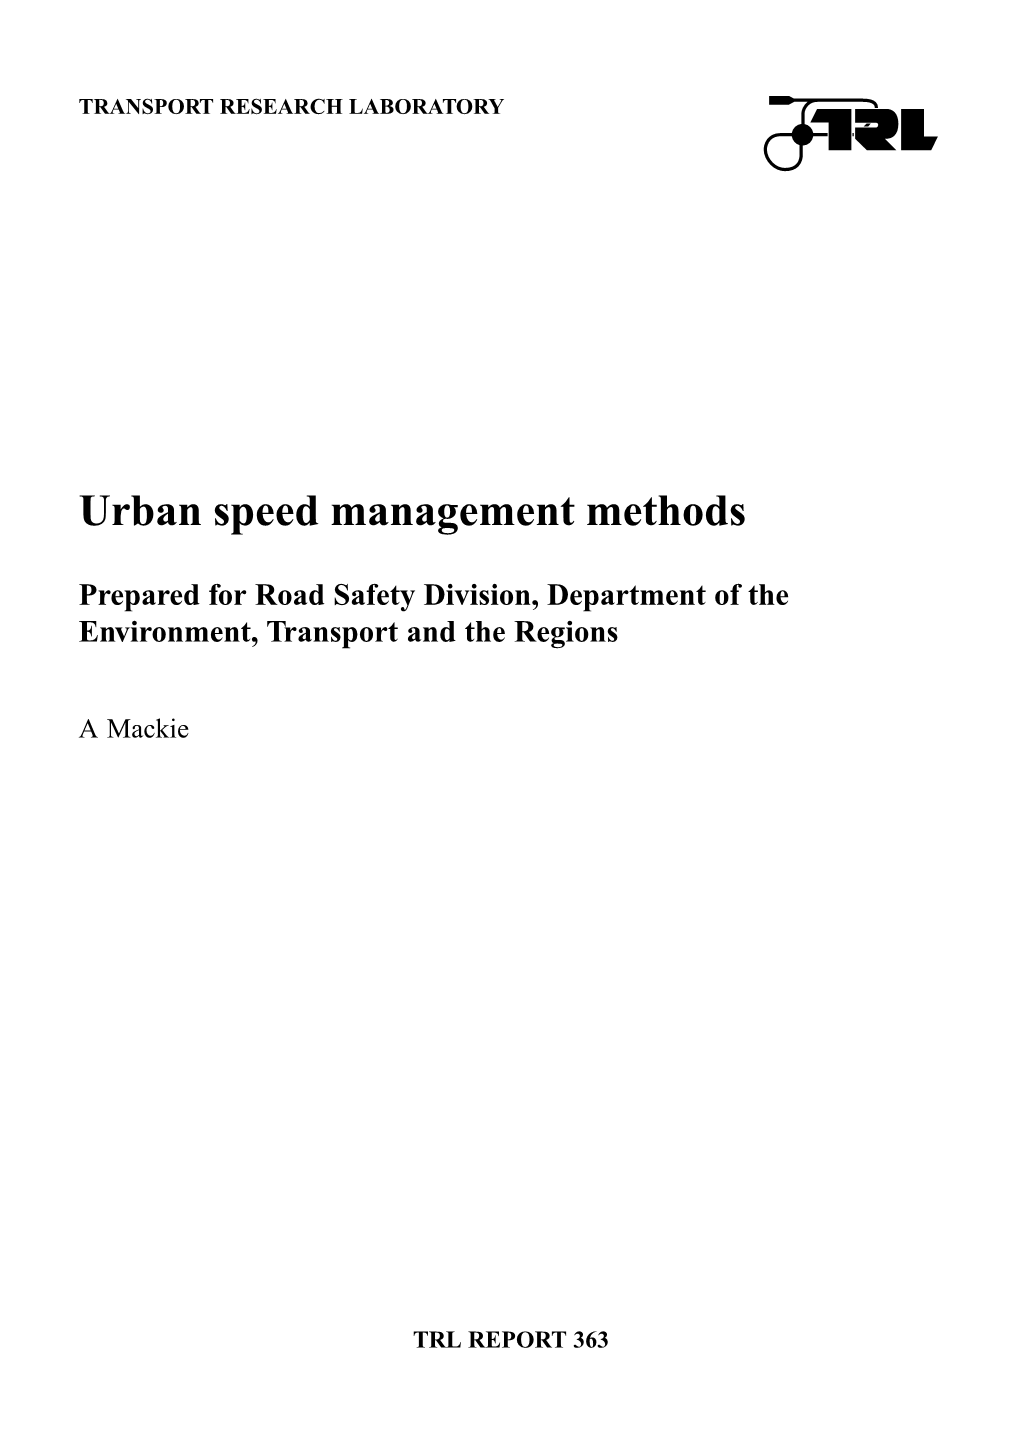 Urban Speed Management Methods